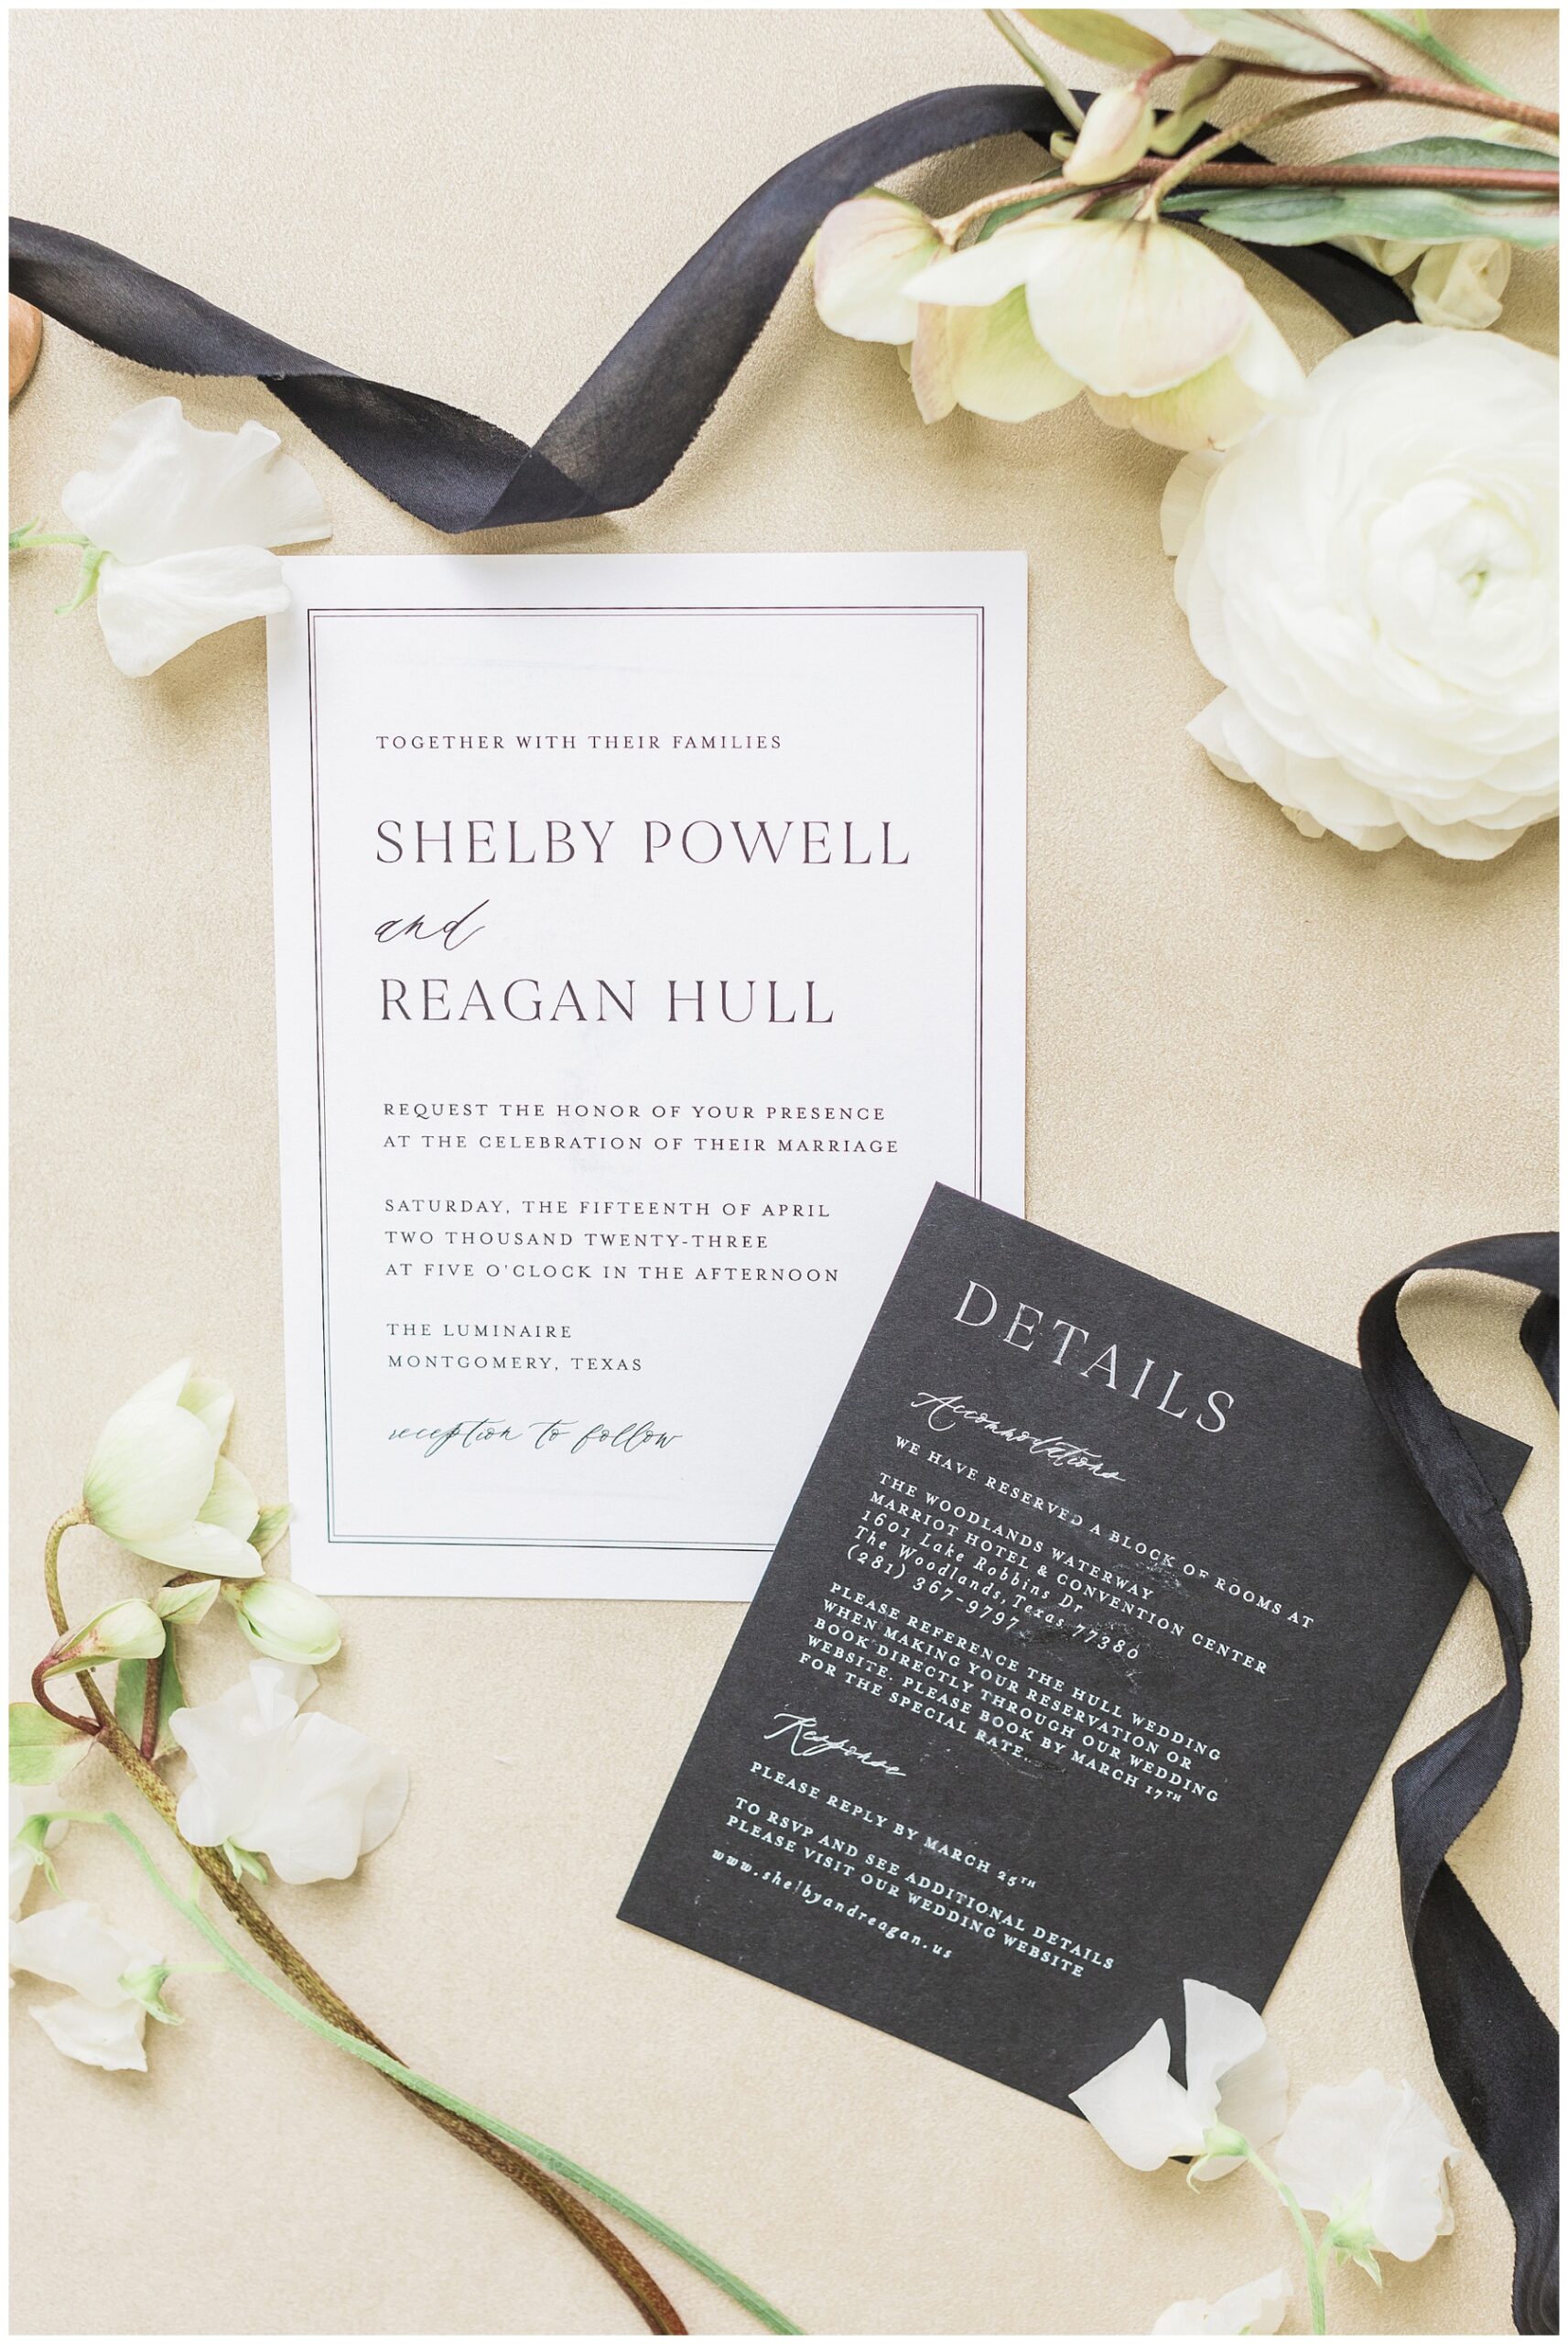 Black and white wedding invitation